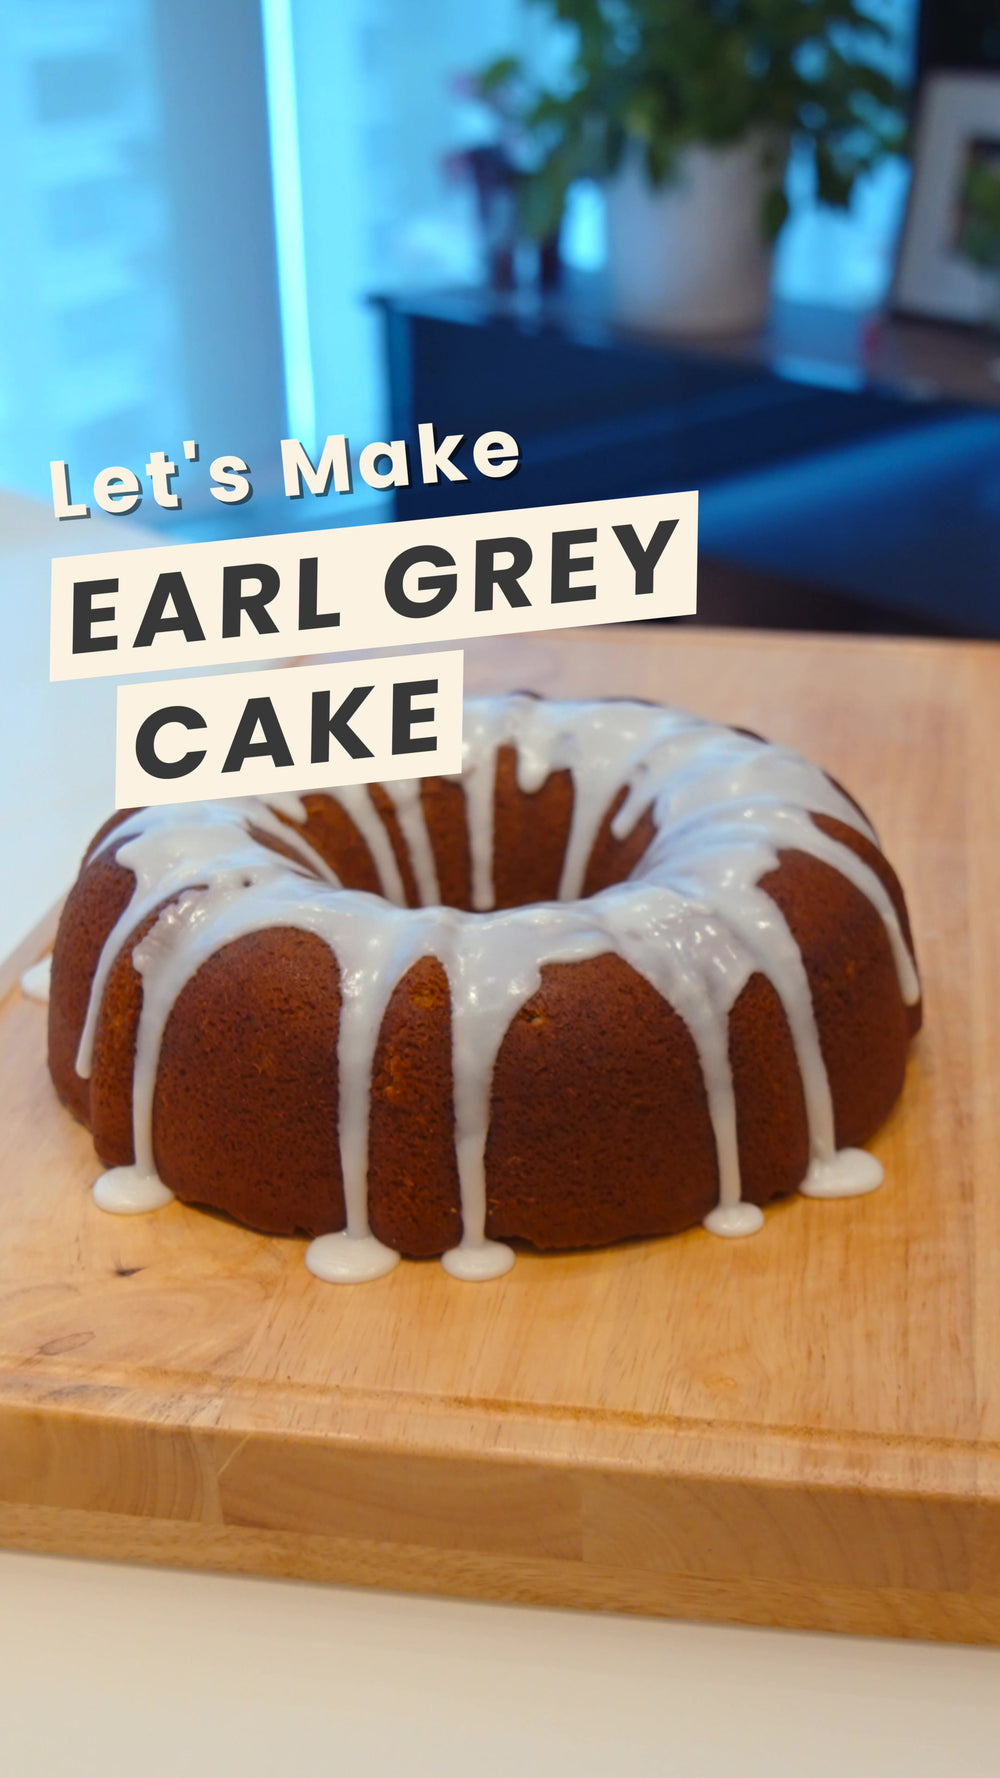 Let's Make Ep11: Earl Grey Cake